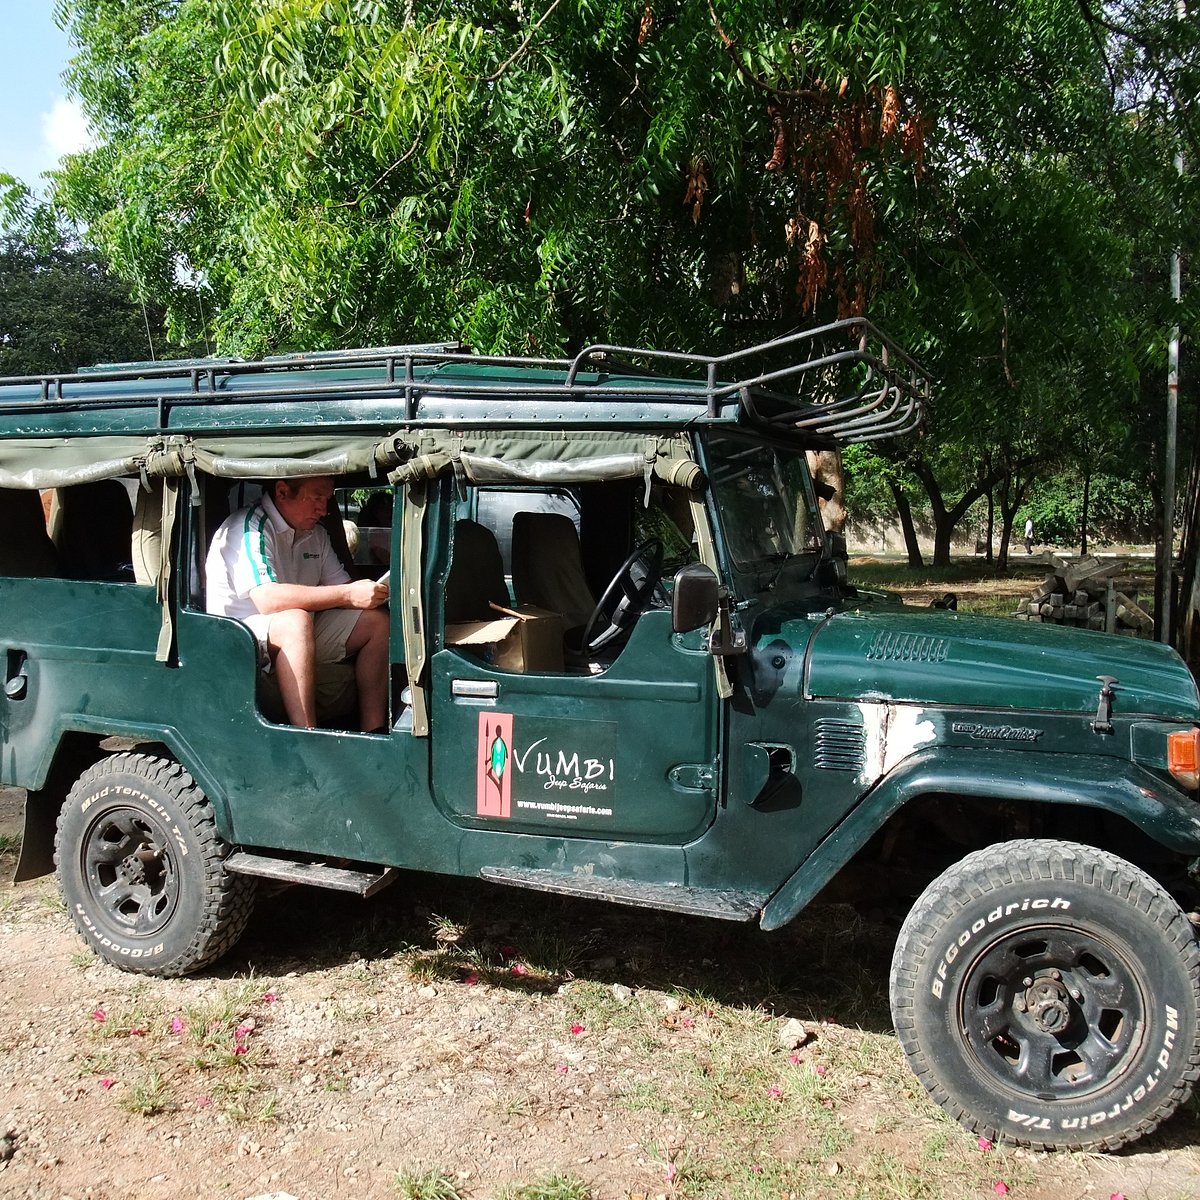 Vumbi Jeep Safaris (Ukunda) - All You Need to Know BEFORE You Go